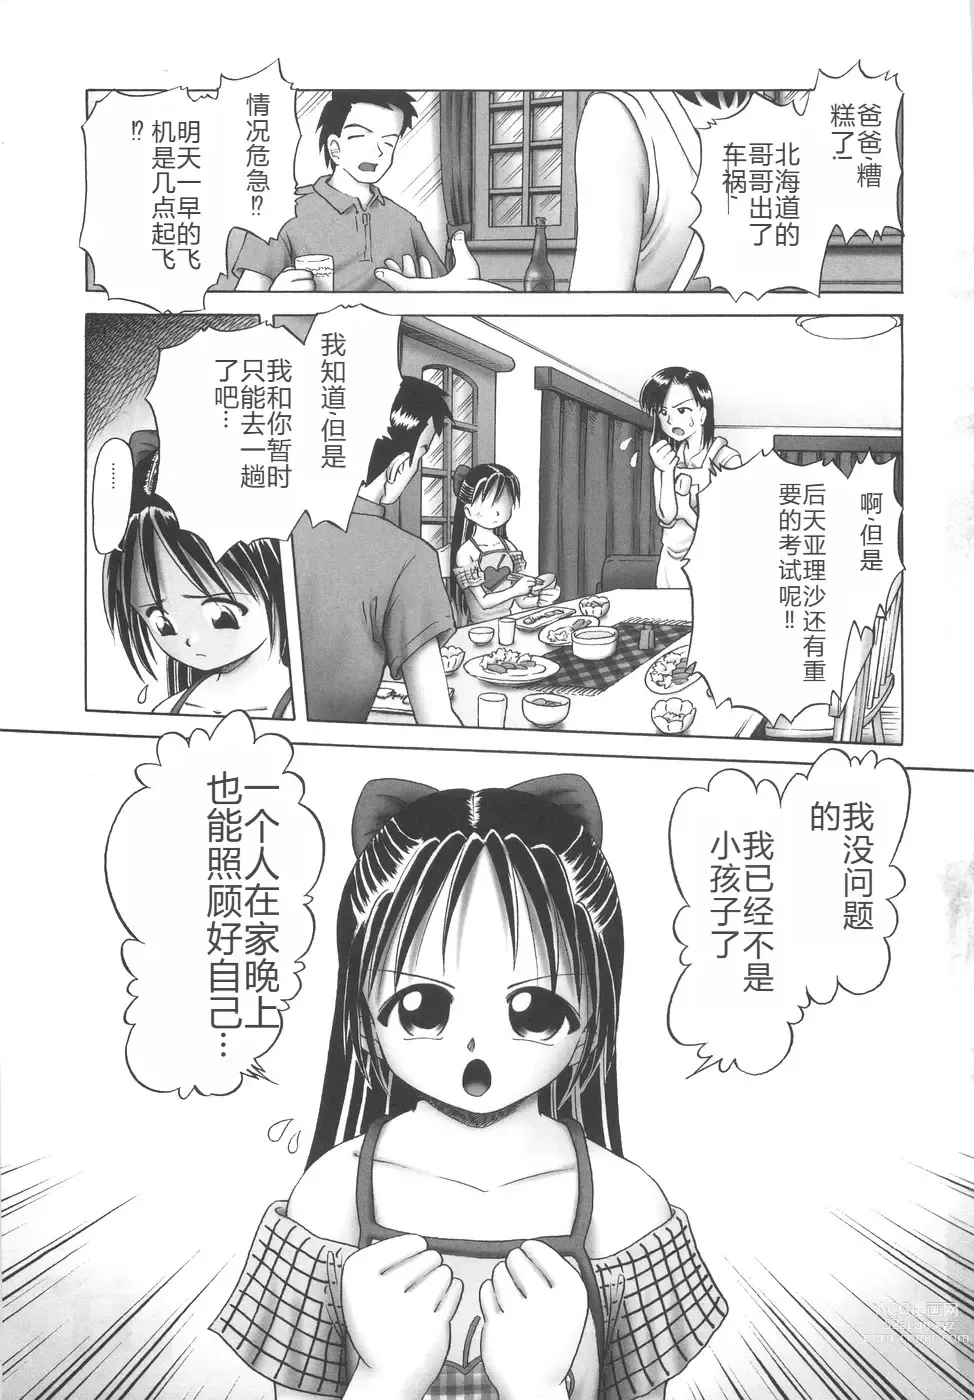 Page 7 of manga Hitoribocchi no Orusuban